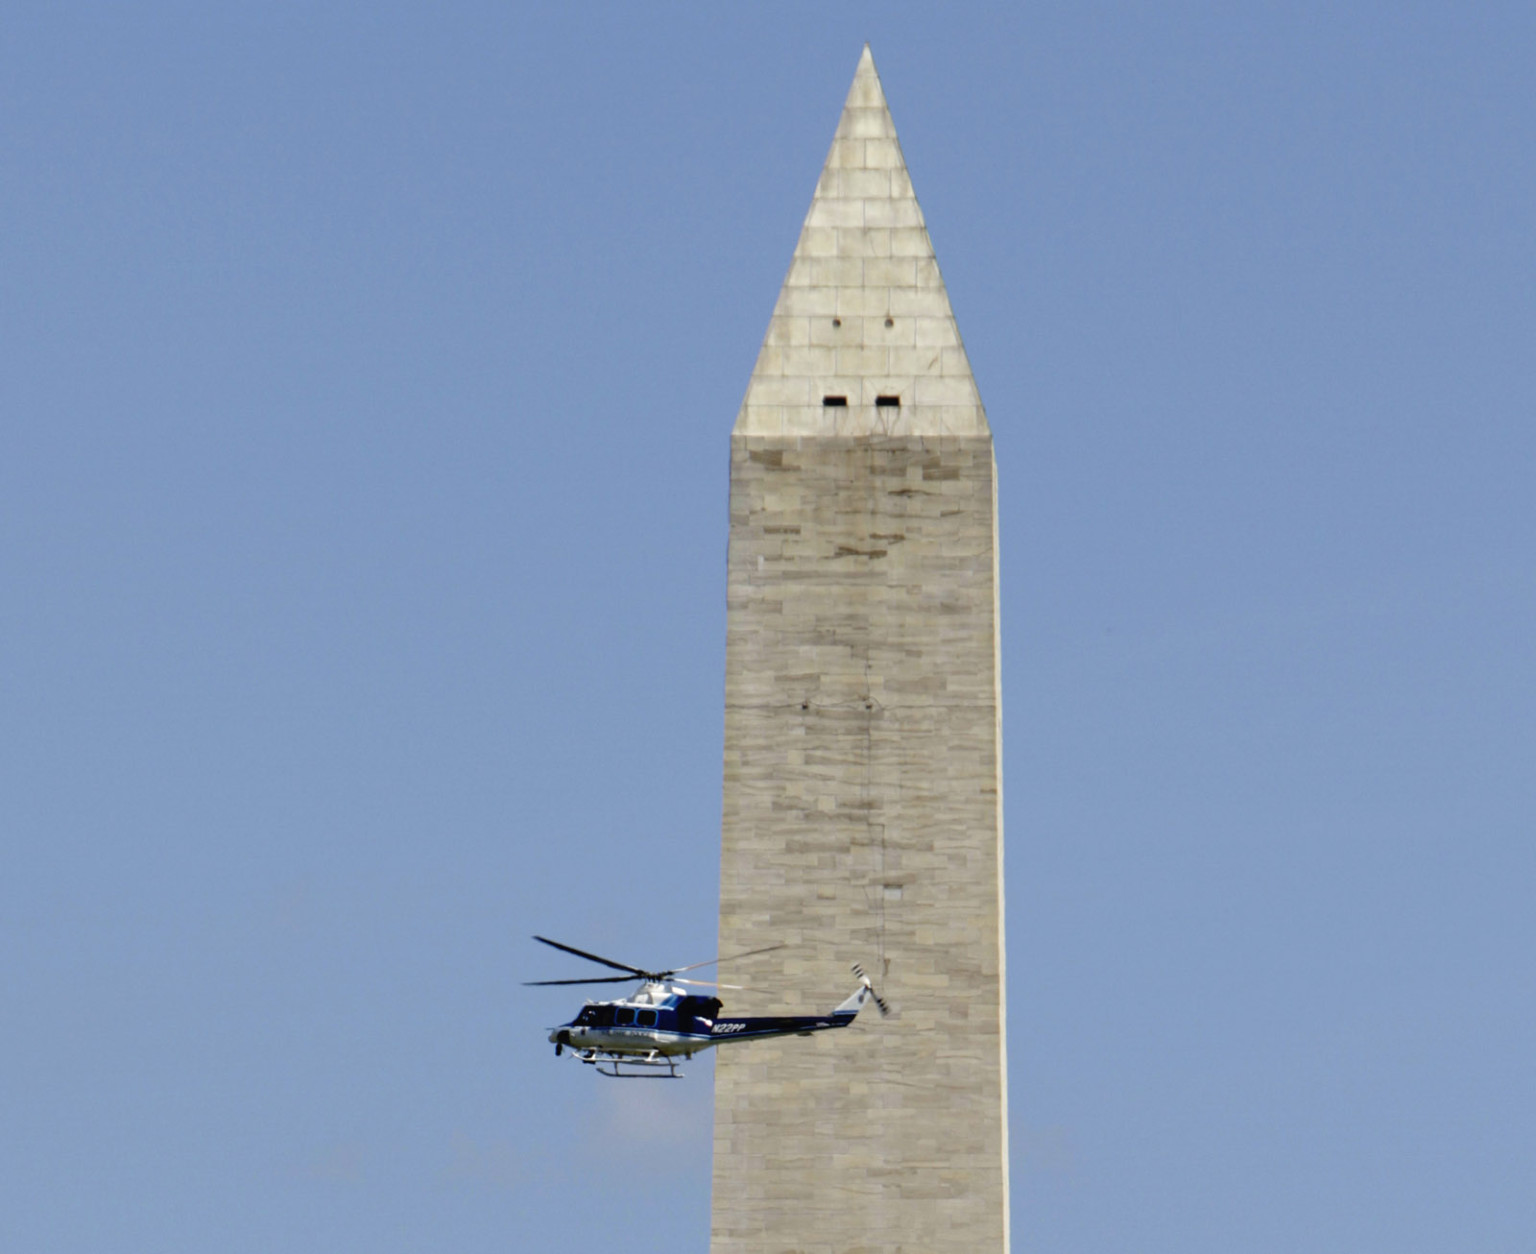 WTOP | Washington Monument to be closed indefinitely